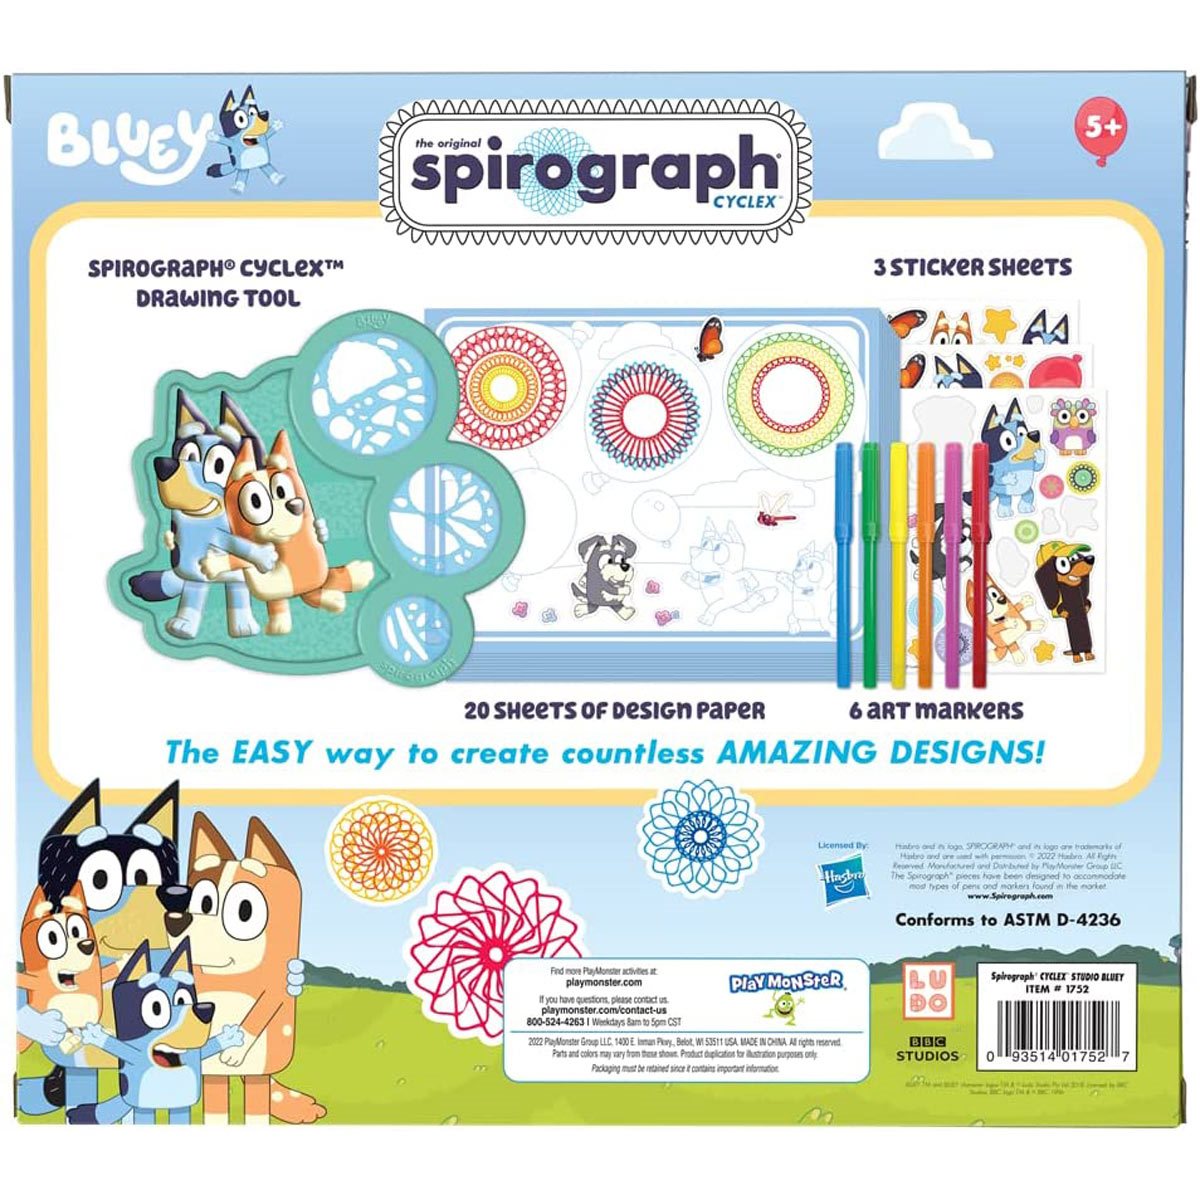 Spirograph - The Original Spirograph Junior Set